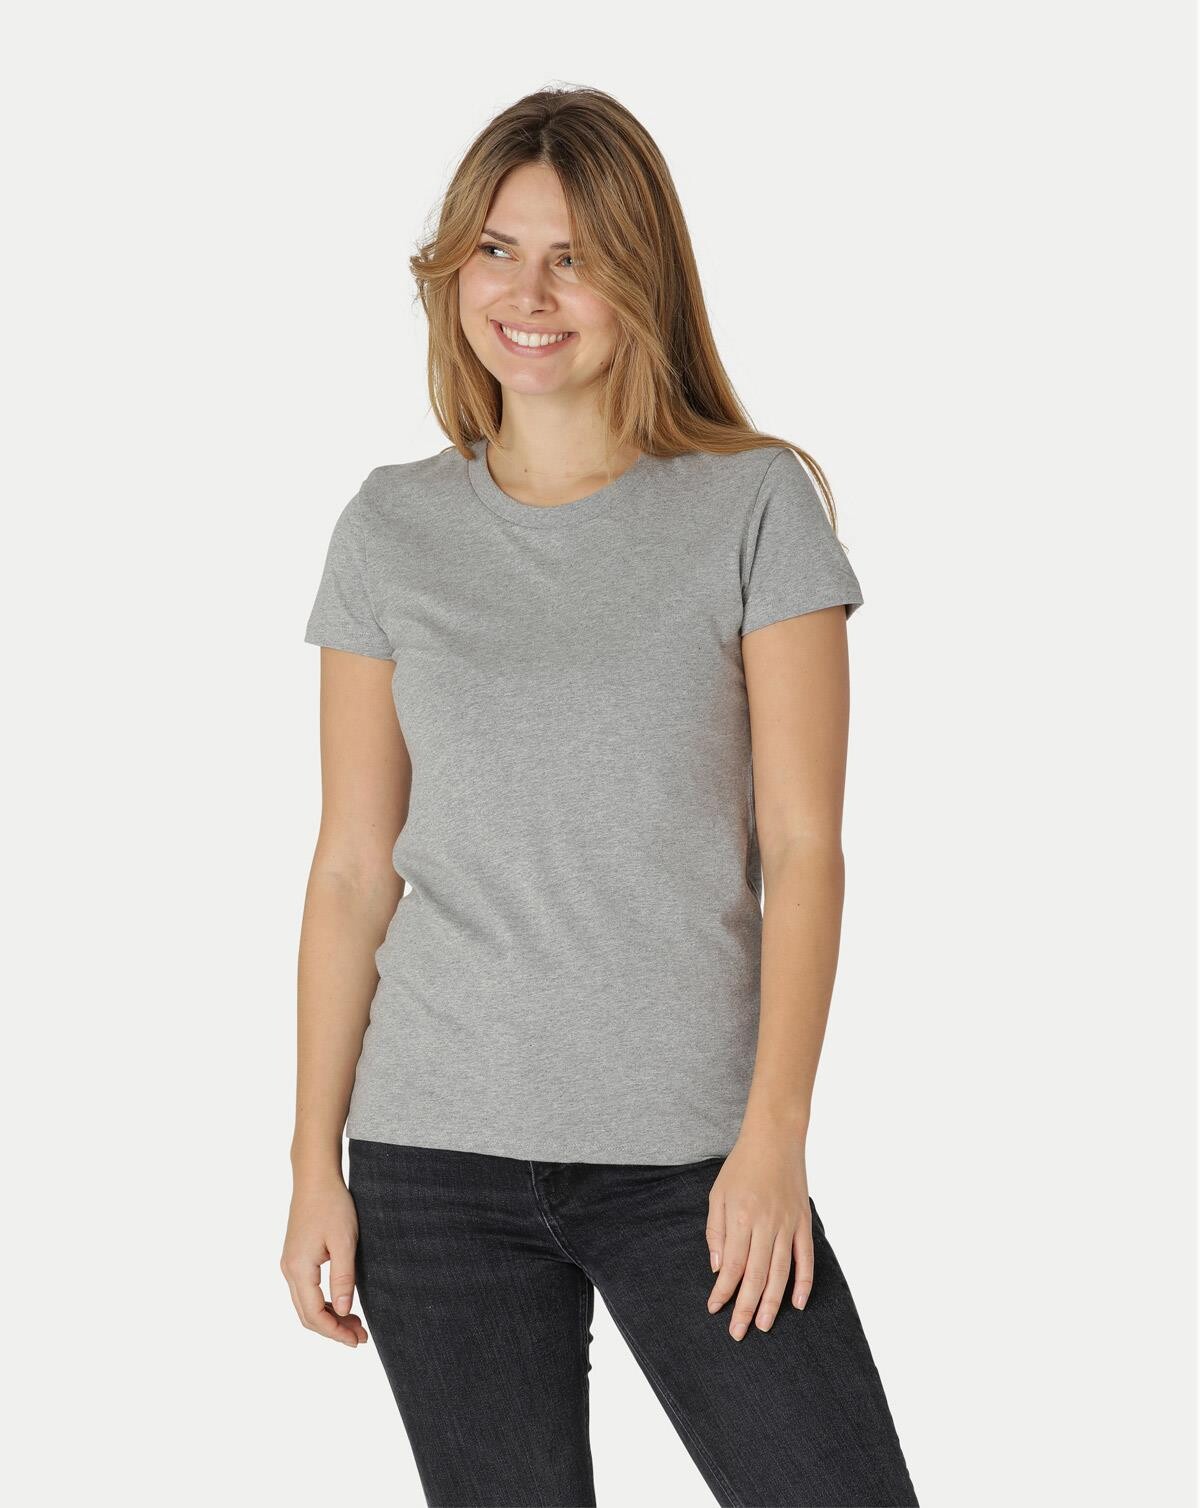 Neutral Økologisk Dame Tætsiddende T-Shirt (Grå Meleret, XS)